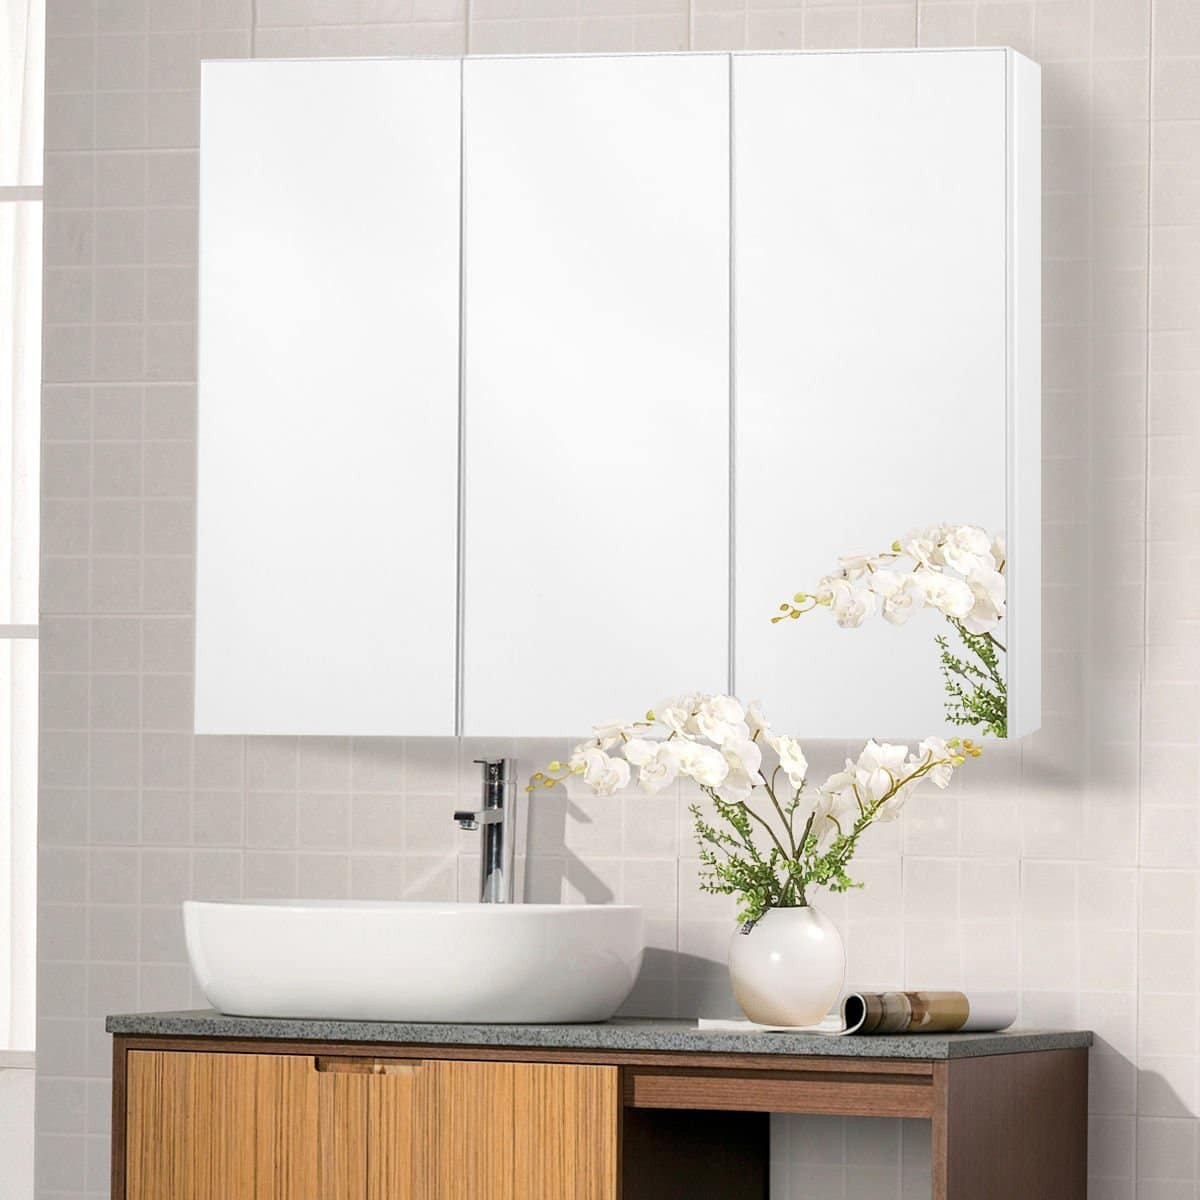 Bathroom Vanity Medicine Cabinet
 Top 10 Best Mirror Medicine Cabinets in 2019